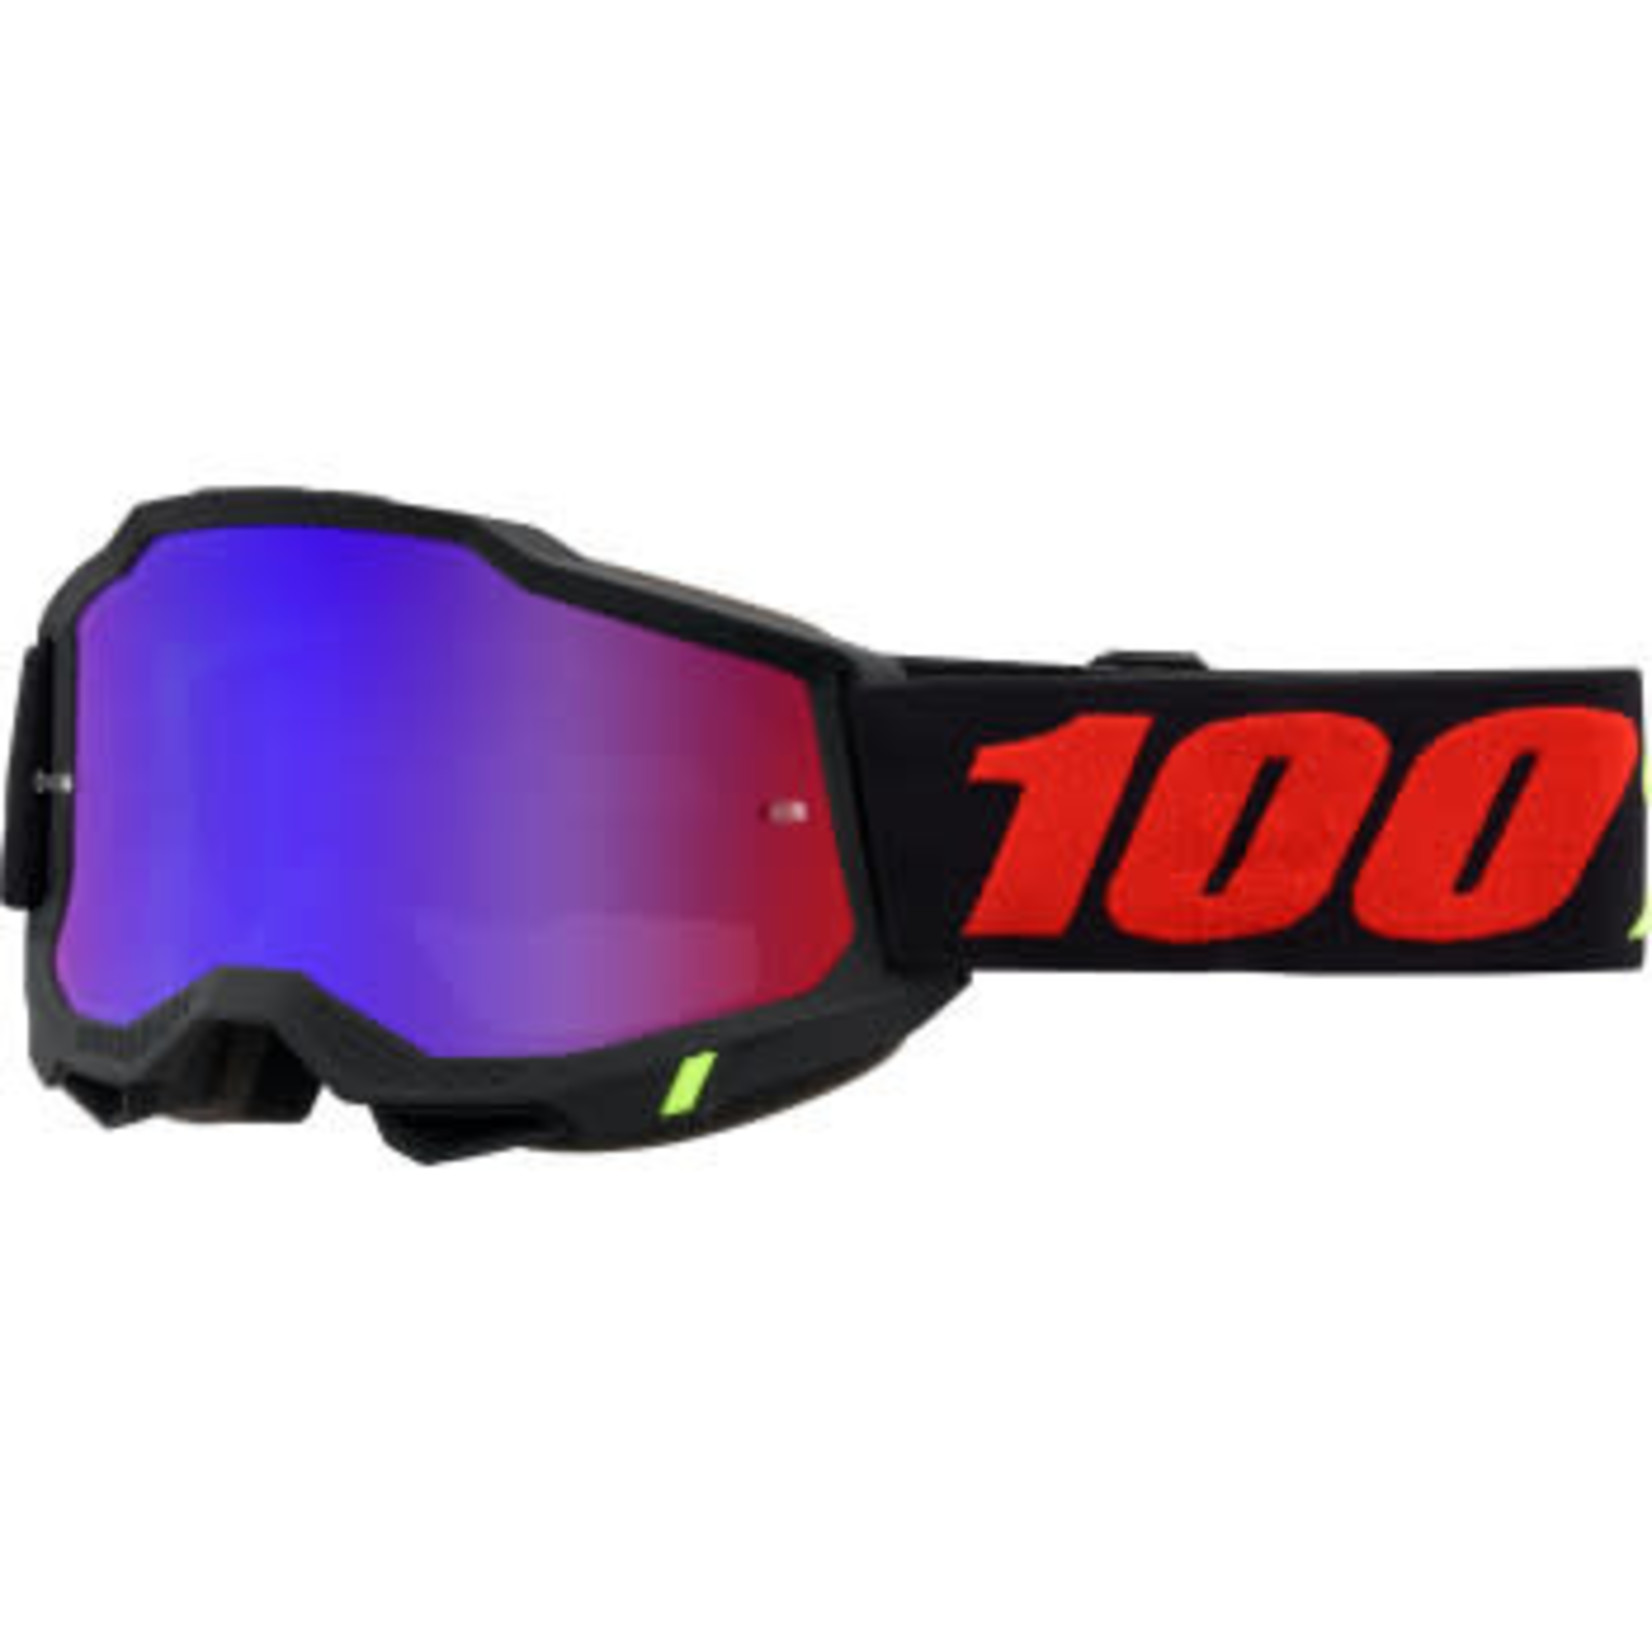 100% ACCURI 2 Goggle Morphuis-Mirror Red/Blue Lens